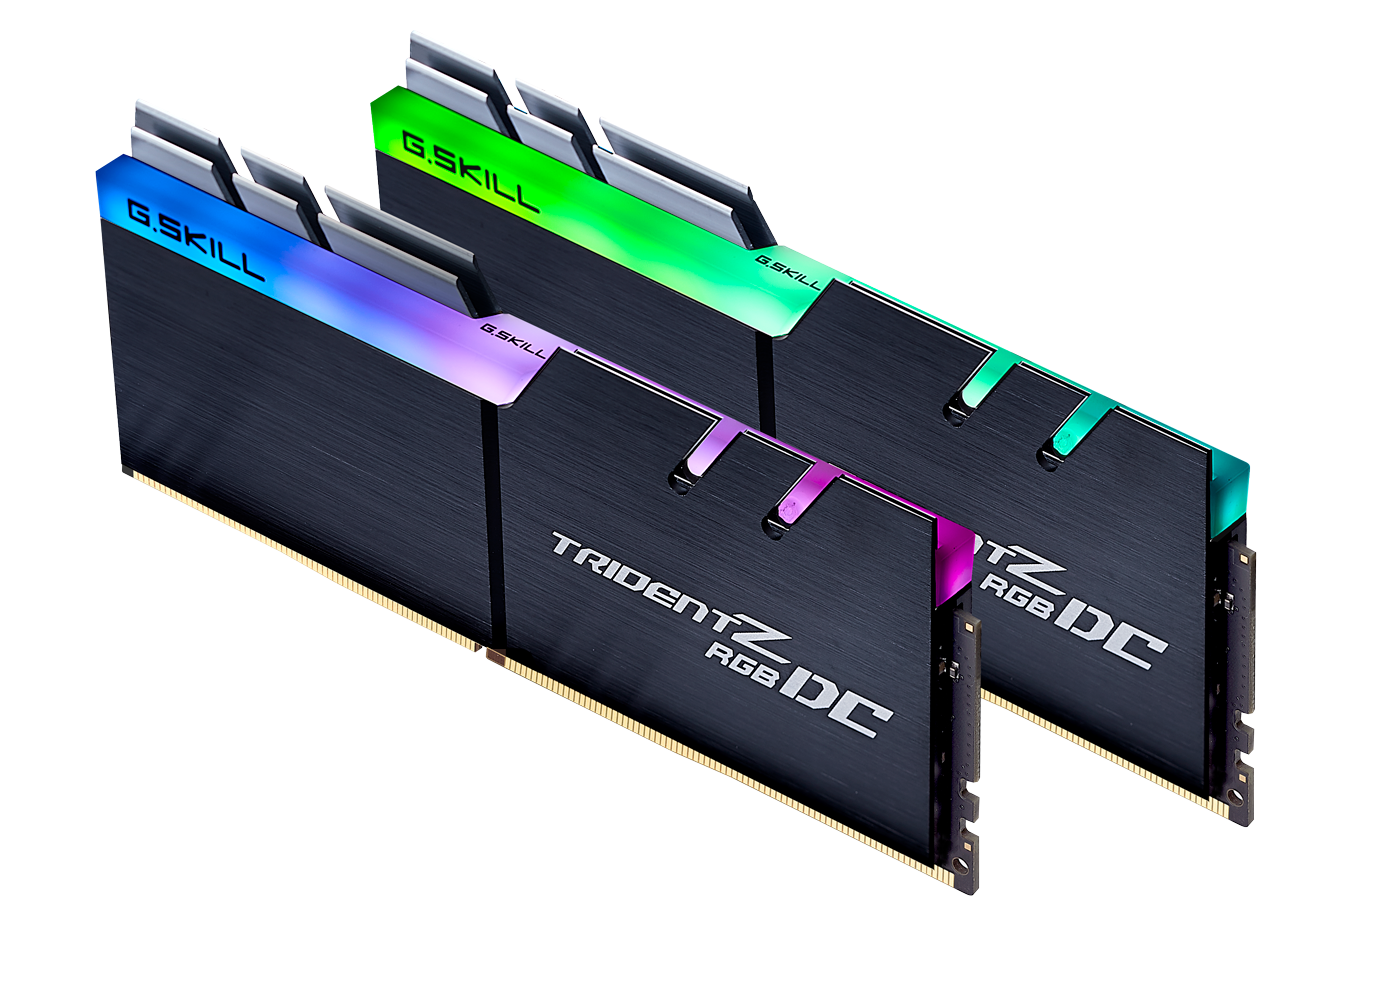 trident z rgb dc 01 original G.SKILL เปิดตัวแรม Trident Z RGB DC Series DDR4 64GB (32GBx2) รุ่นใหม่ล่าสุดรองรับเมนบอร์ด Z390 เต็มรูปแบบด้วยเทคโนโลยี Double Capacity DIMM Technology ที่ใช้แรมแค่ 1คู่แต่ความจุมากถึง 64GB